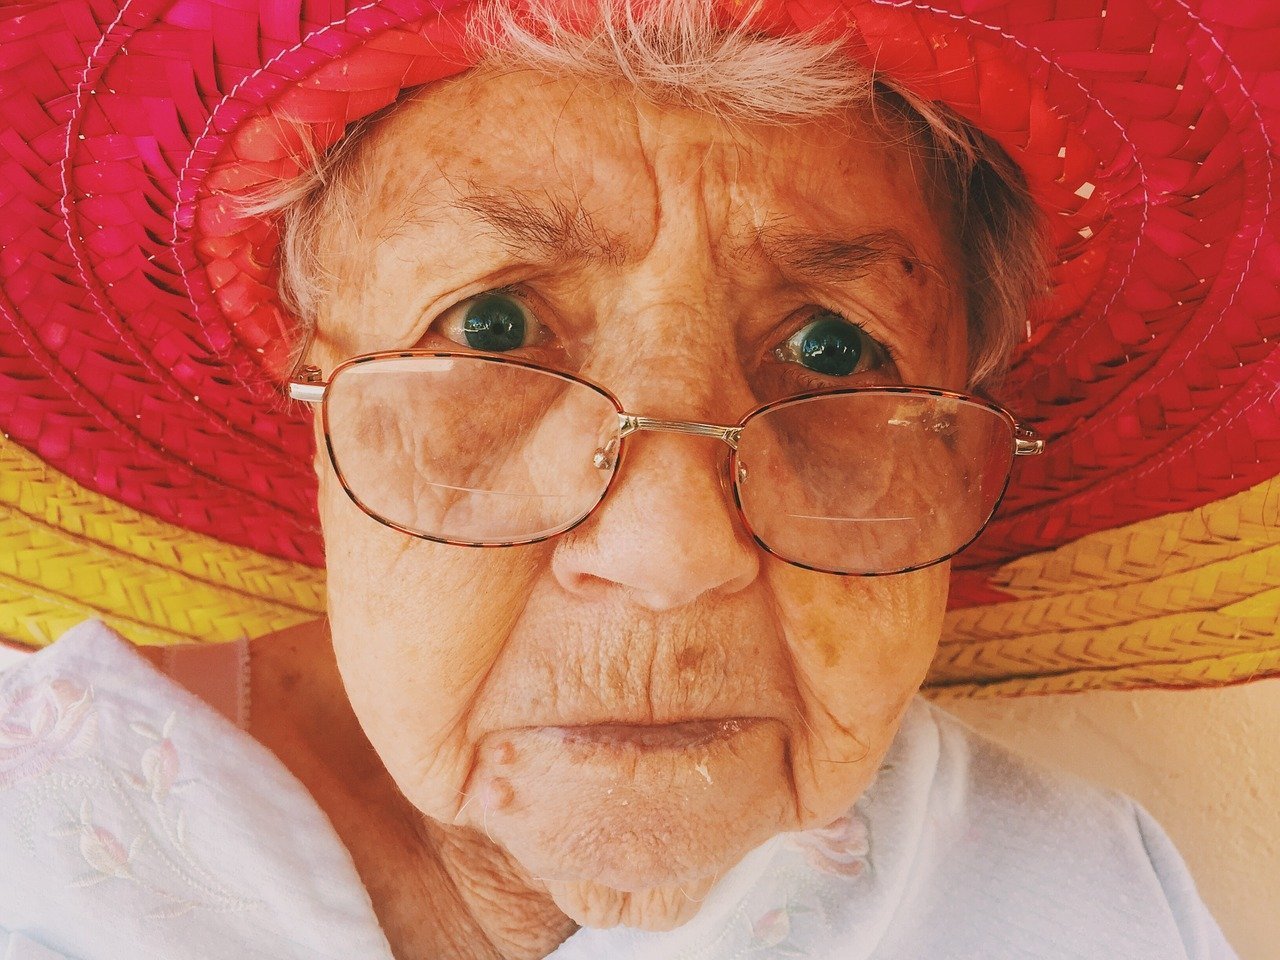 Old lady staring at the camera | Source: Pixabay